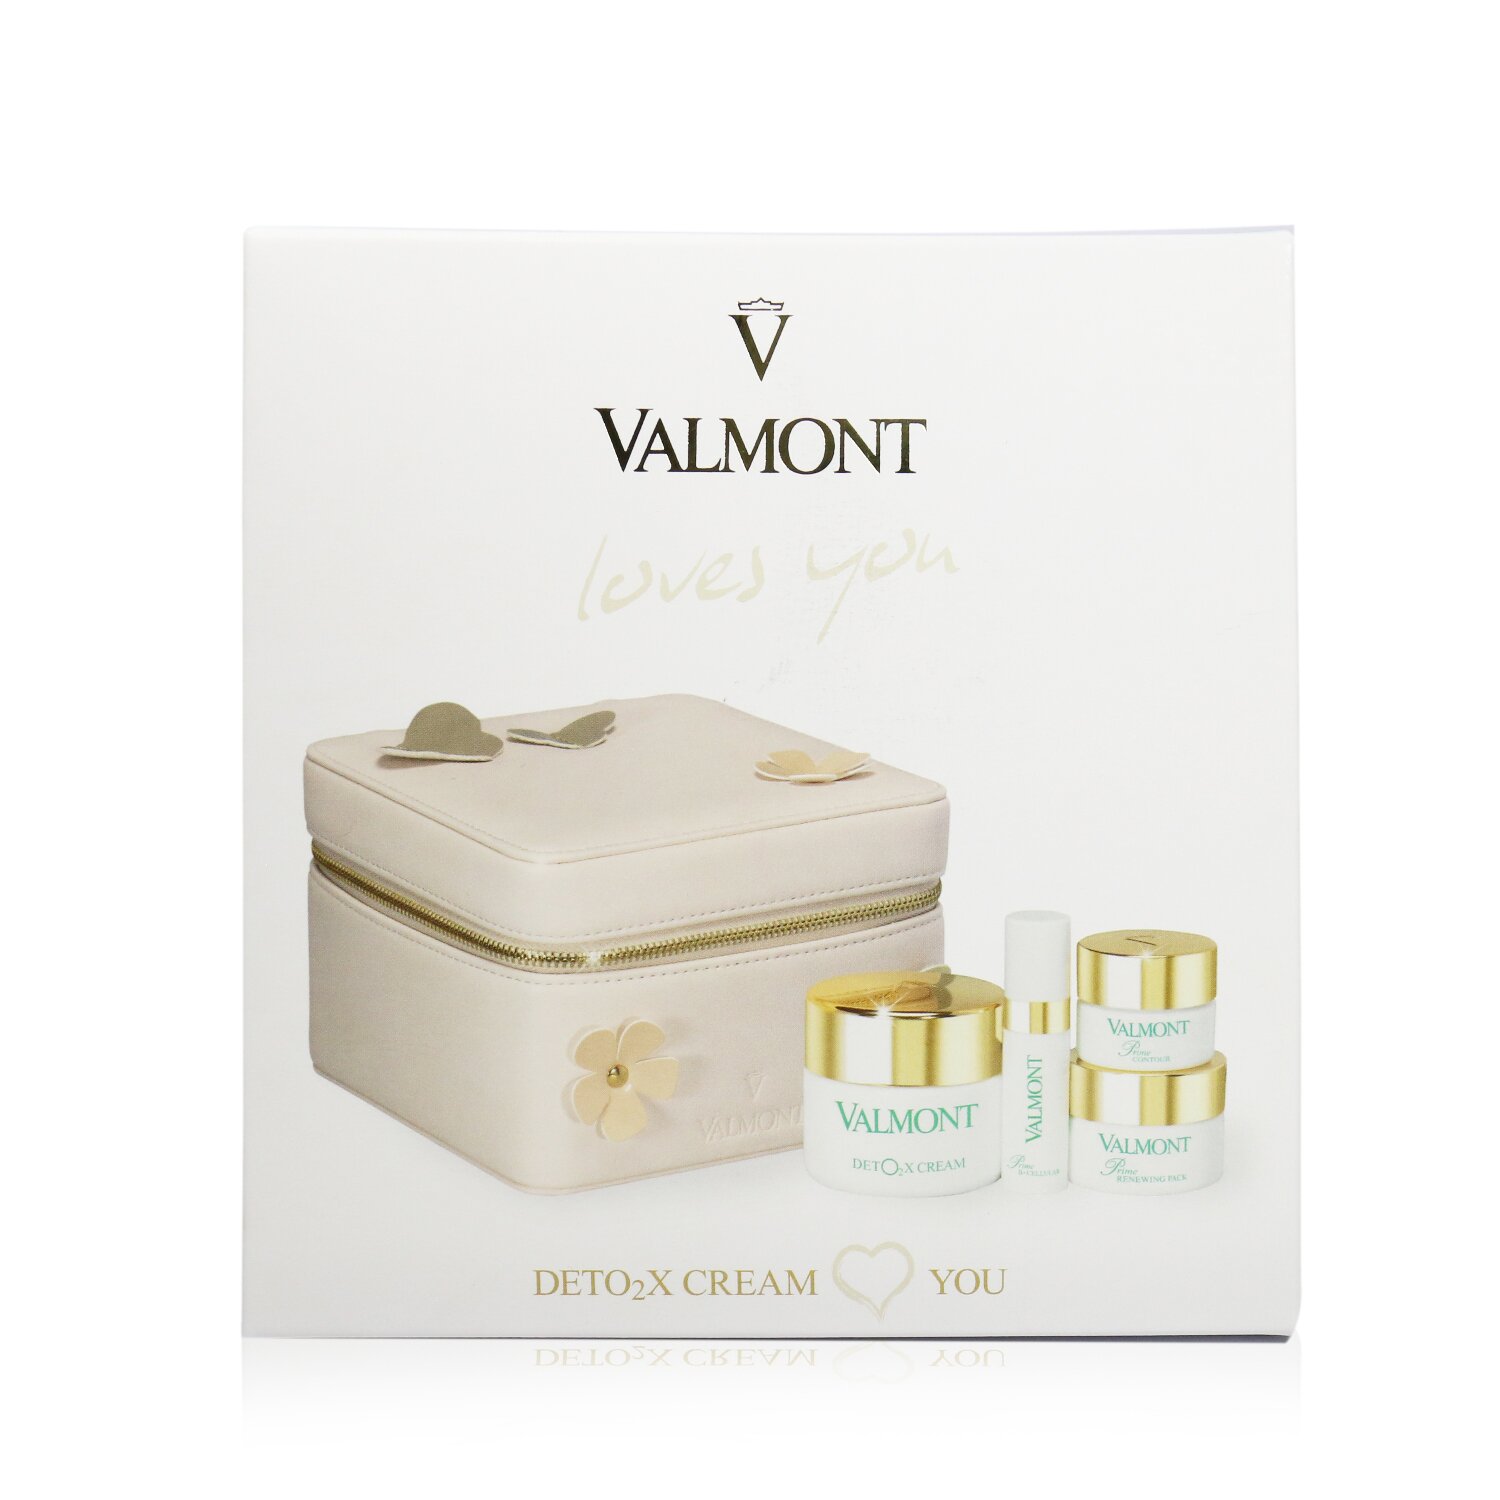 Valmont Zestaw Deto2x Cream Loves You : Prime Renewing Pack 15ml+Prime B-Cellular 5ml+Pime Contour 5ml+Deto2x Cream 25ml 4pcs + 1case